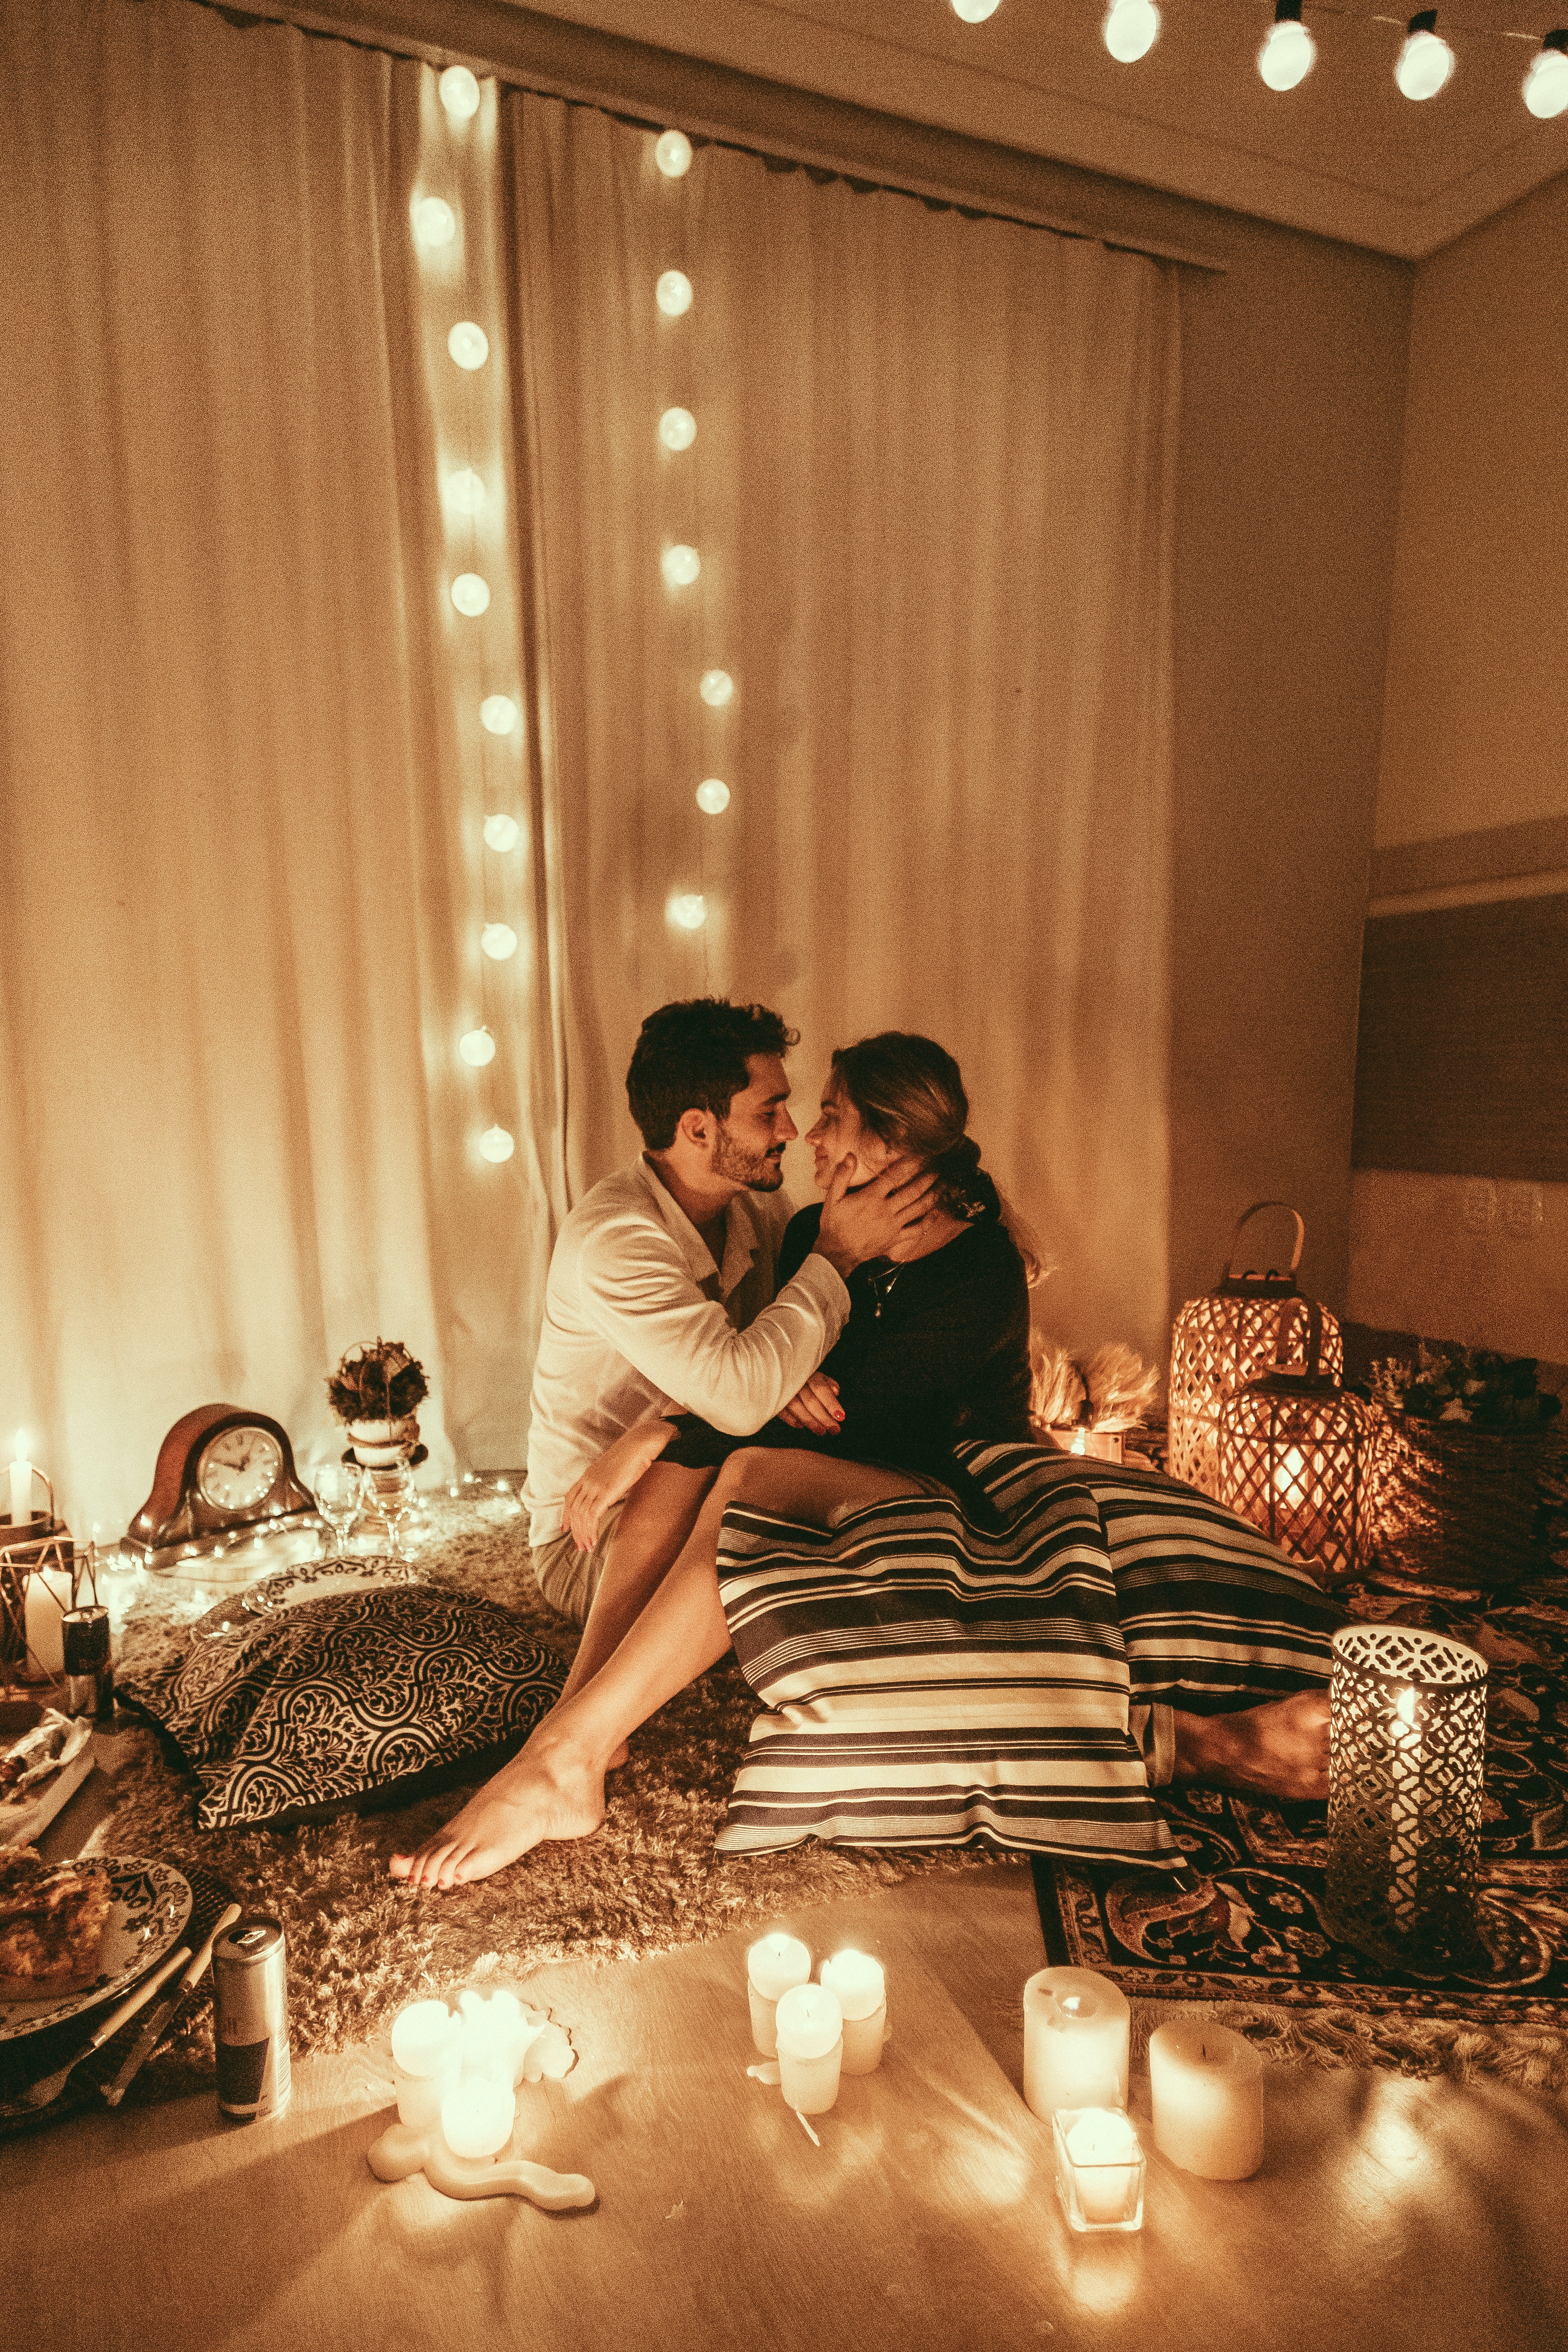 A couple enjoying a romantic evening. | Source: Pexels